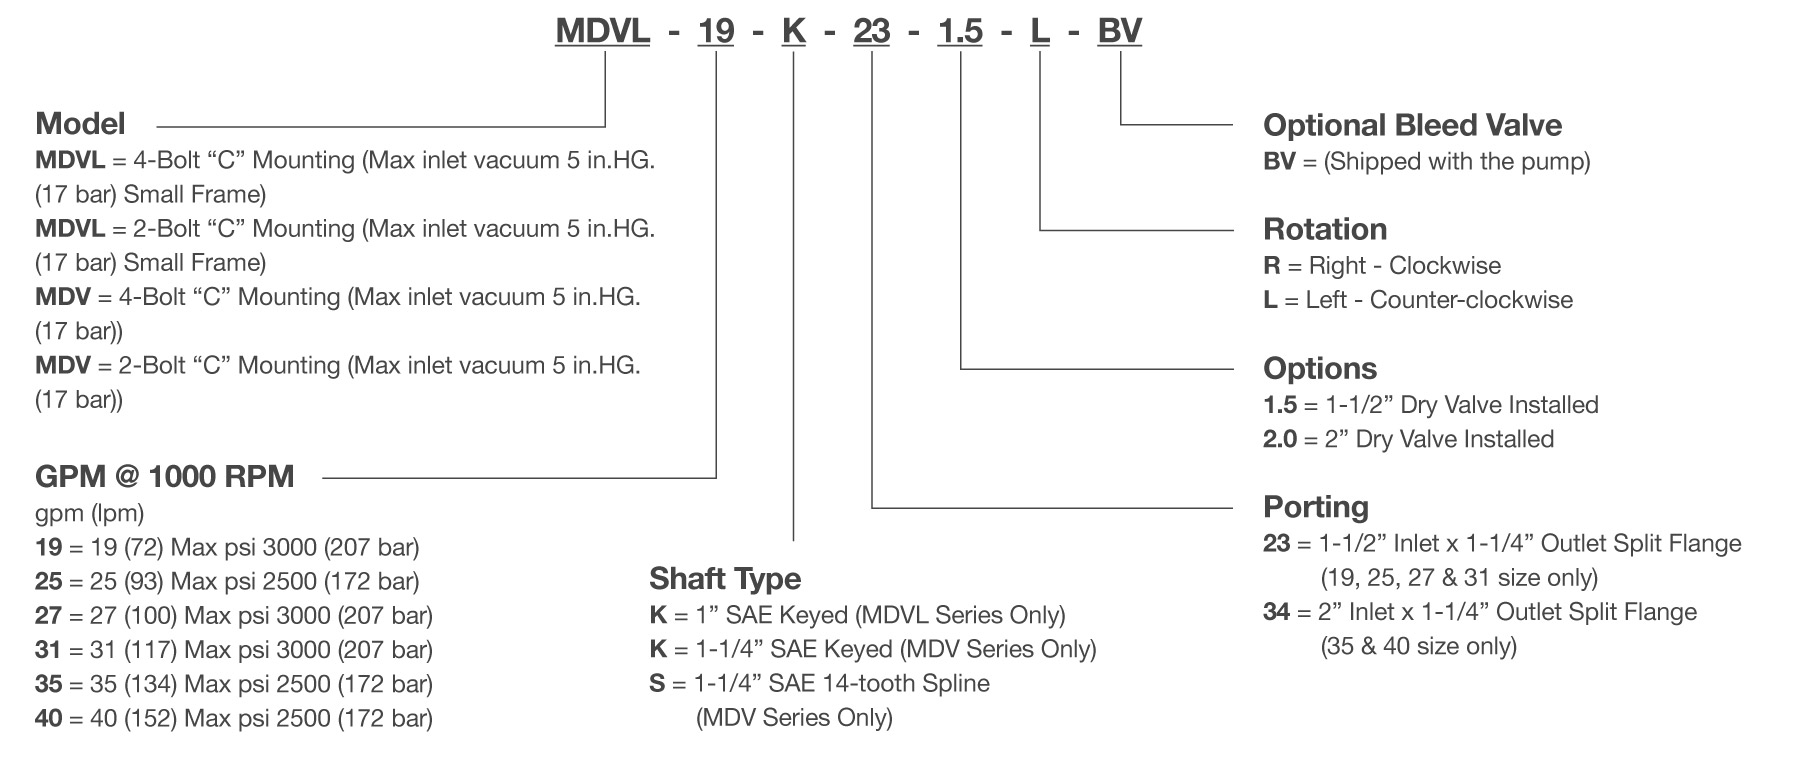 MDV Series Dry Valve Pump Model Code Breakdown